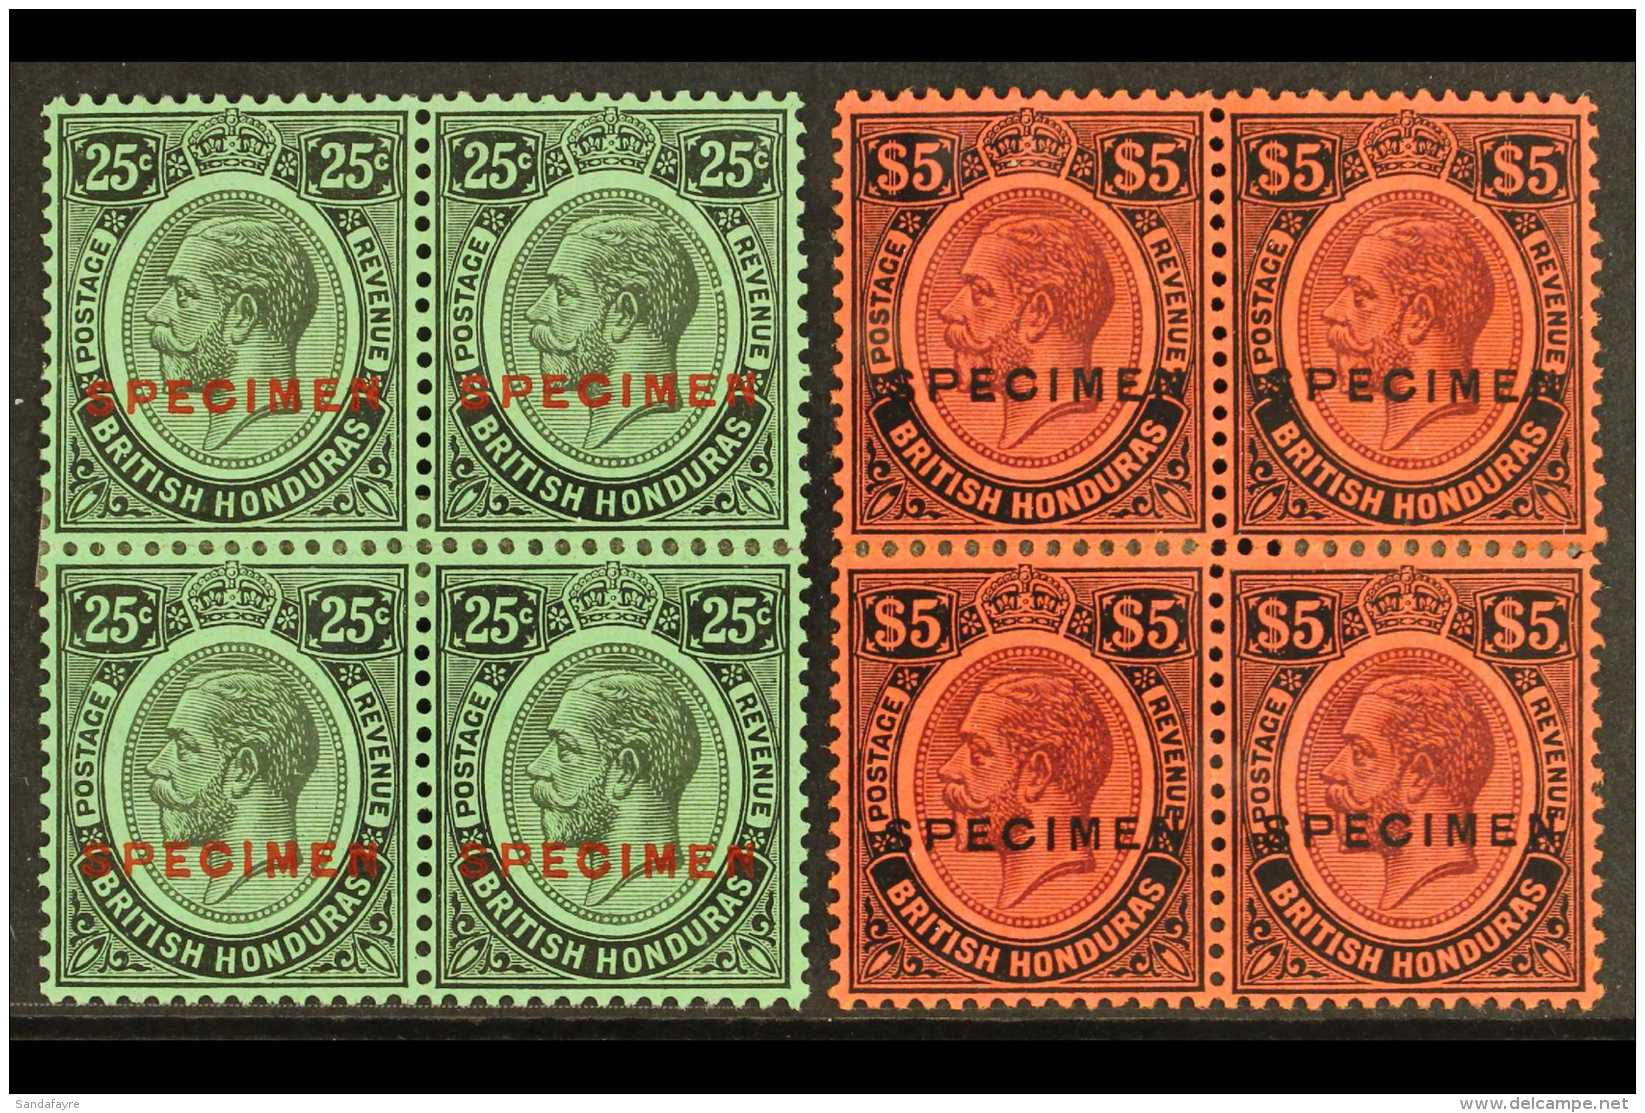 1922 25c Black On Emerald Overprinted "Specimen" In Red And $5 Purple And Black On Red Ovptd "Specimen" In Black,... - Honduras Britannico (...-1970)